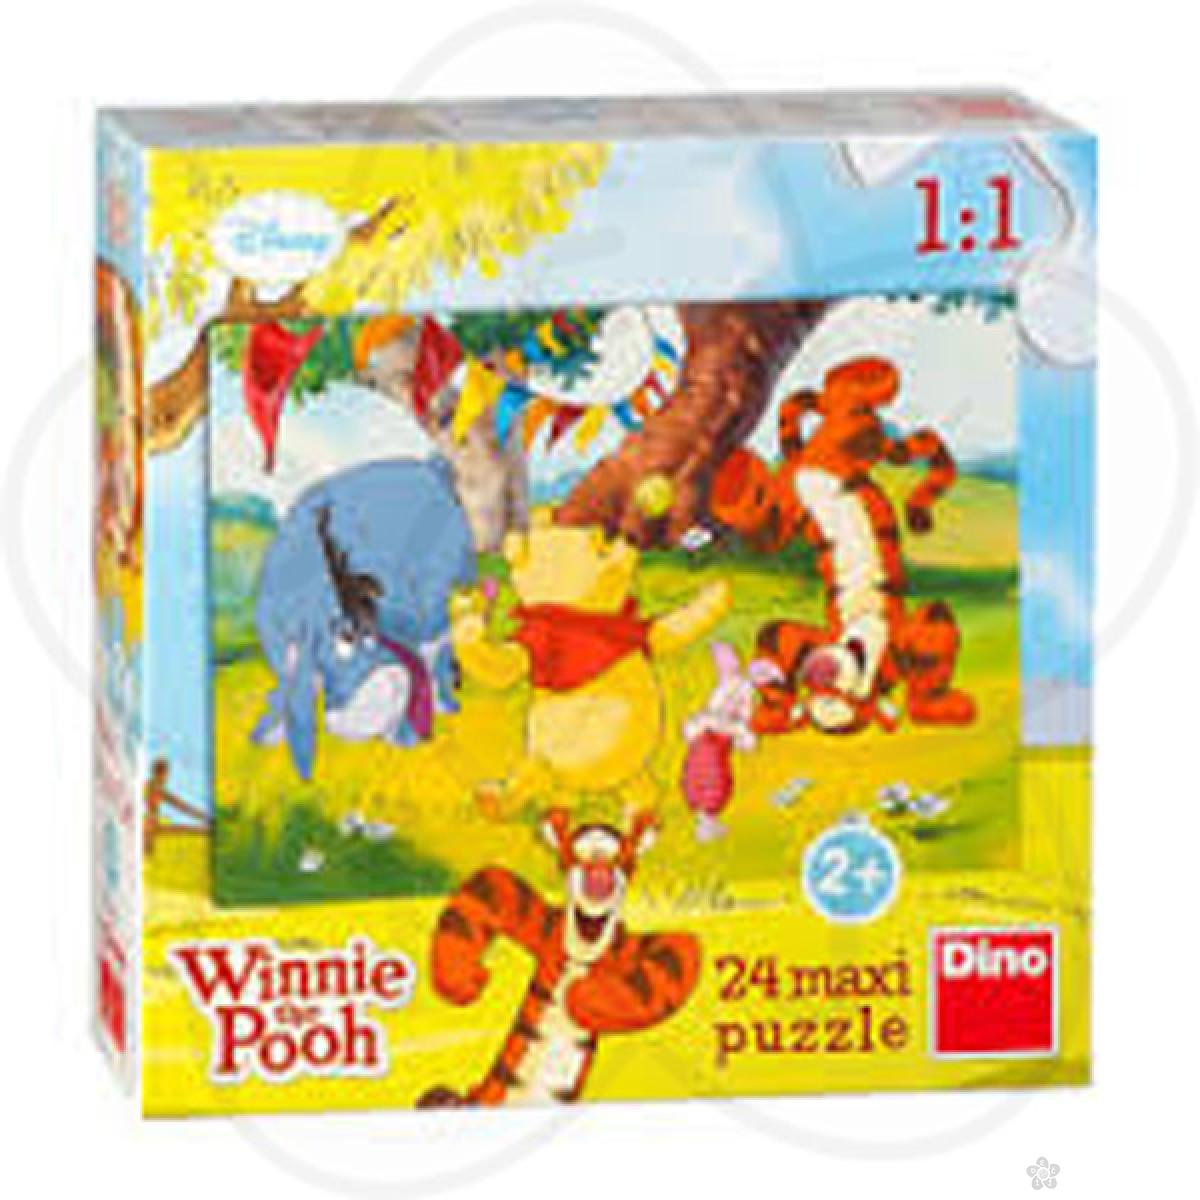 Puzzle za decu Disney Winnie the Pooh 24 maxi puzzle, D350021 